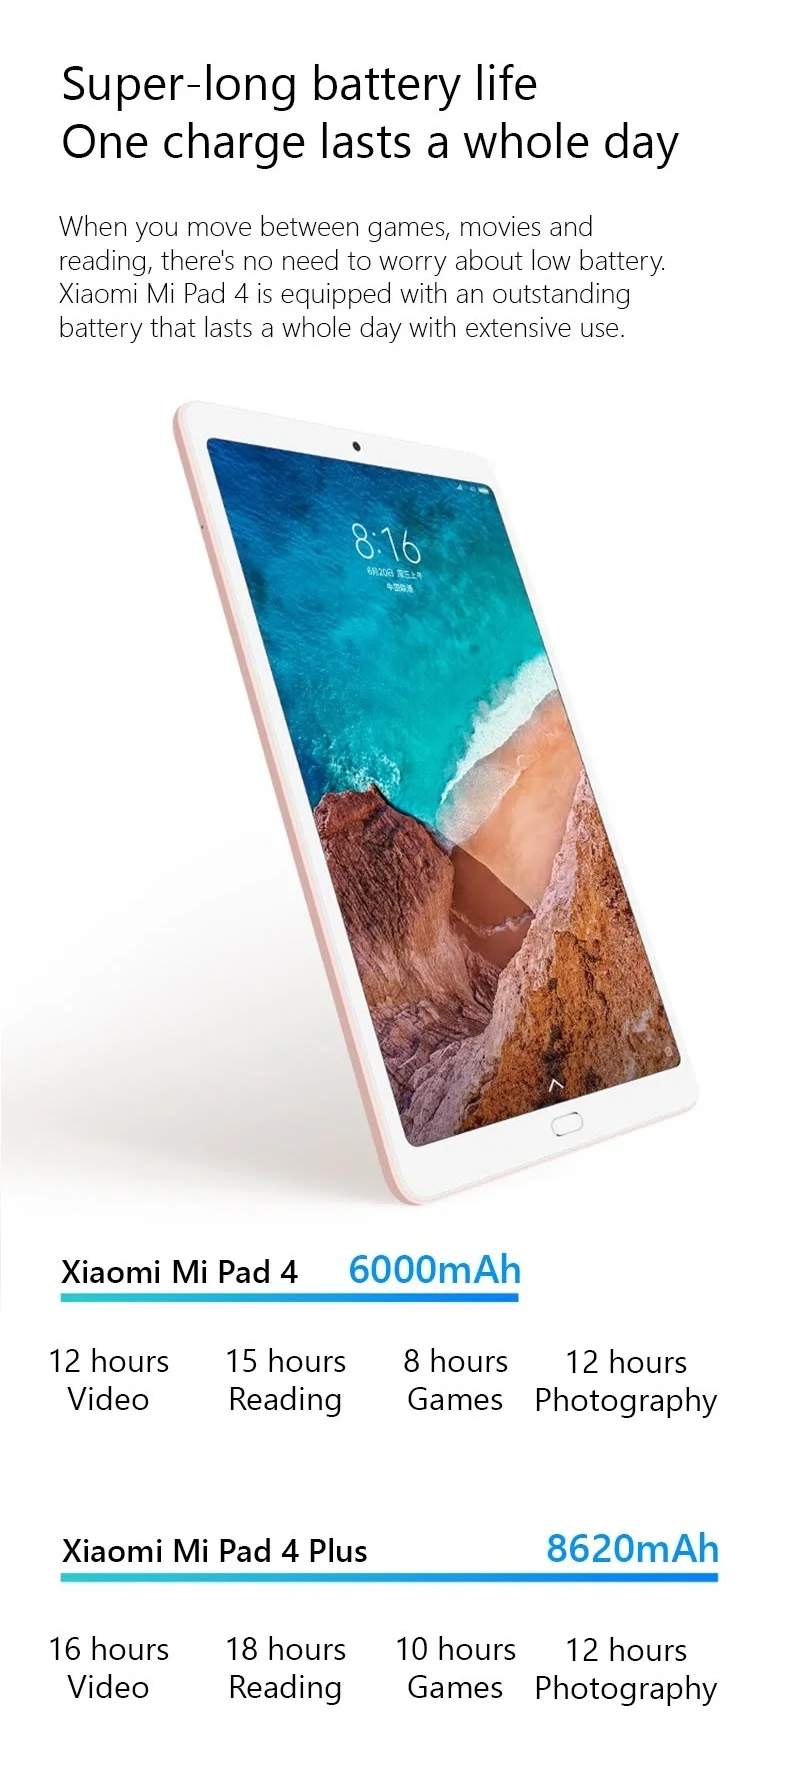 Xiaomi Mi Pad 4 Plus Wifi Lte Cellular Edition 86mah 10 1 Inch Screen Snapdragon 660 Aie Xiaomi 4g Tablet Mipad 4 Plus Buy Xiaomi Mi Pad 4 Plus Mipad 4 Plus Xiaomi